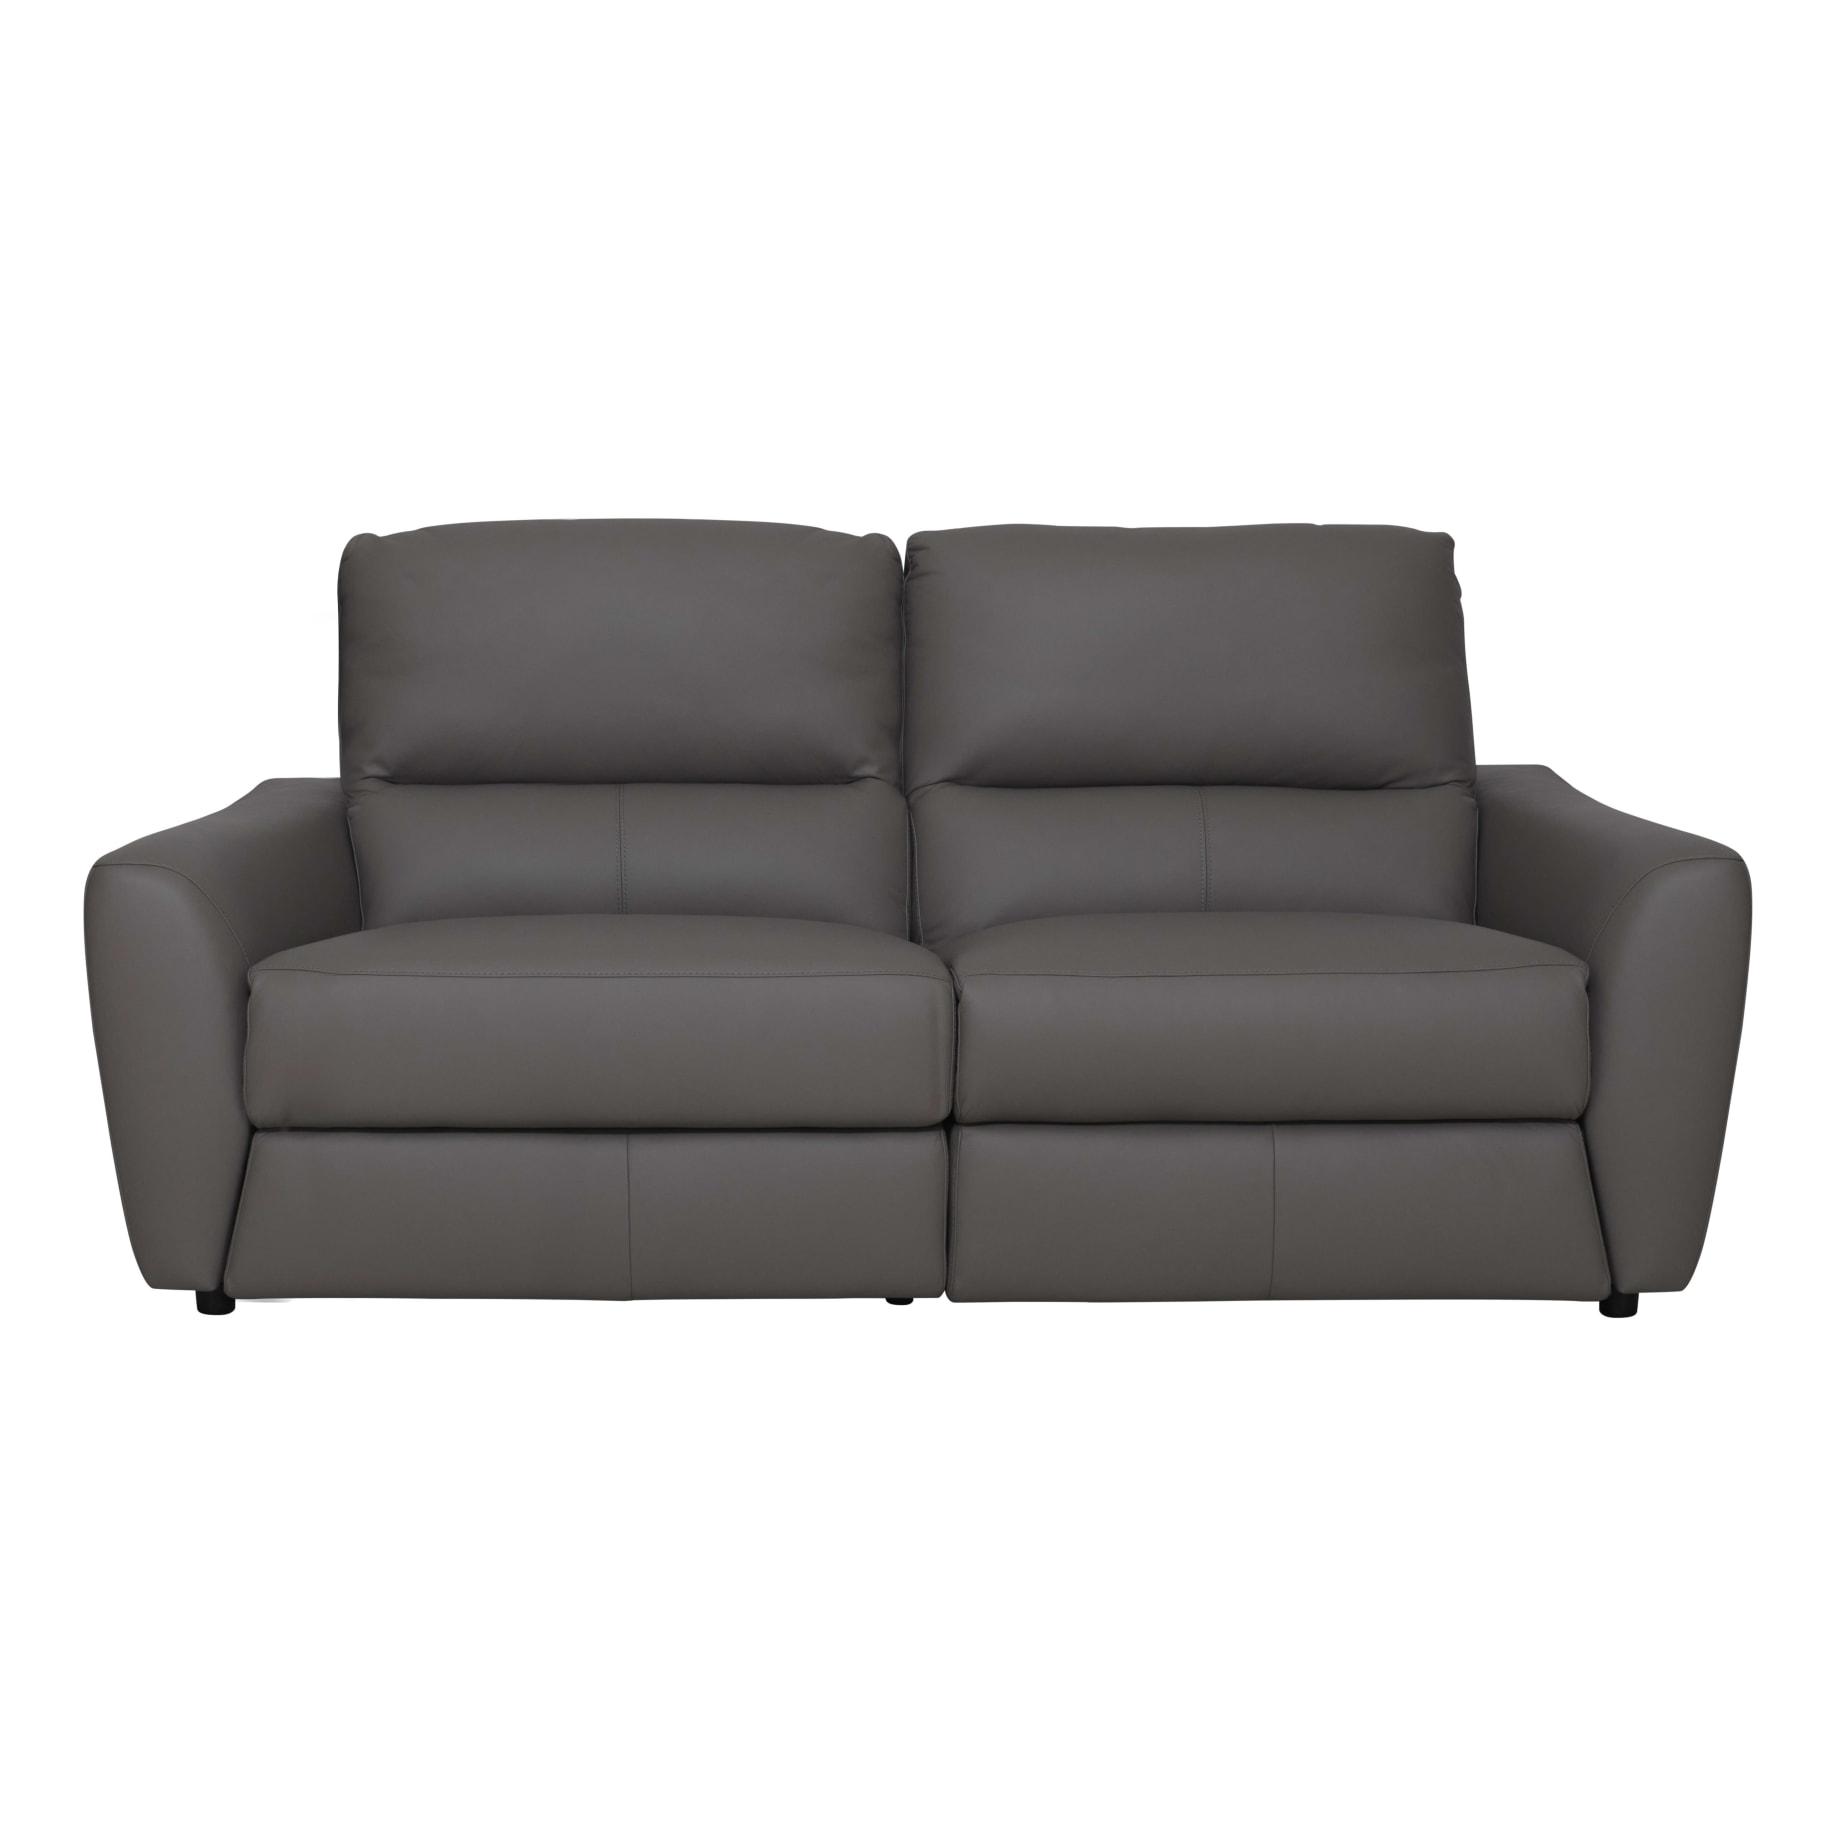 Portland 2 Seater Recliner Sofa in Leather Dark Grey